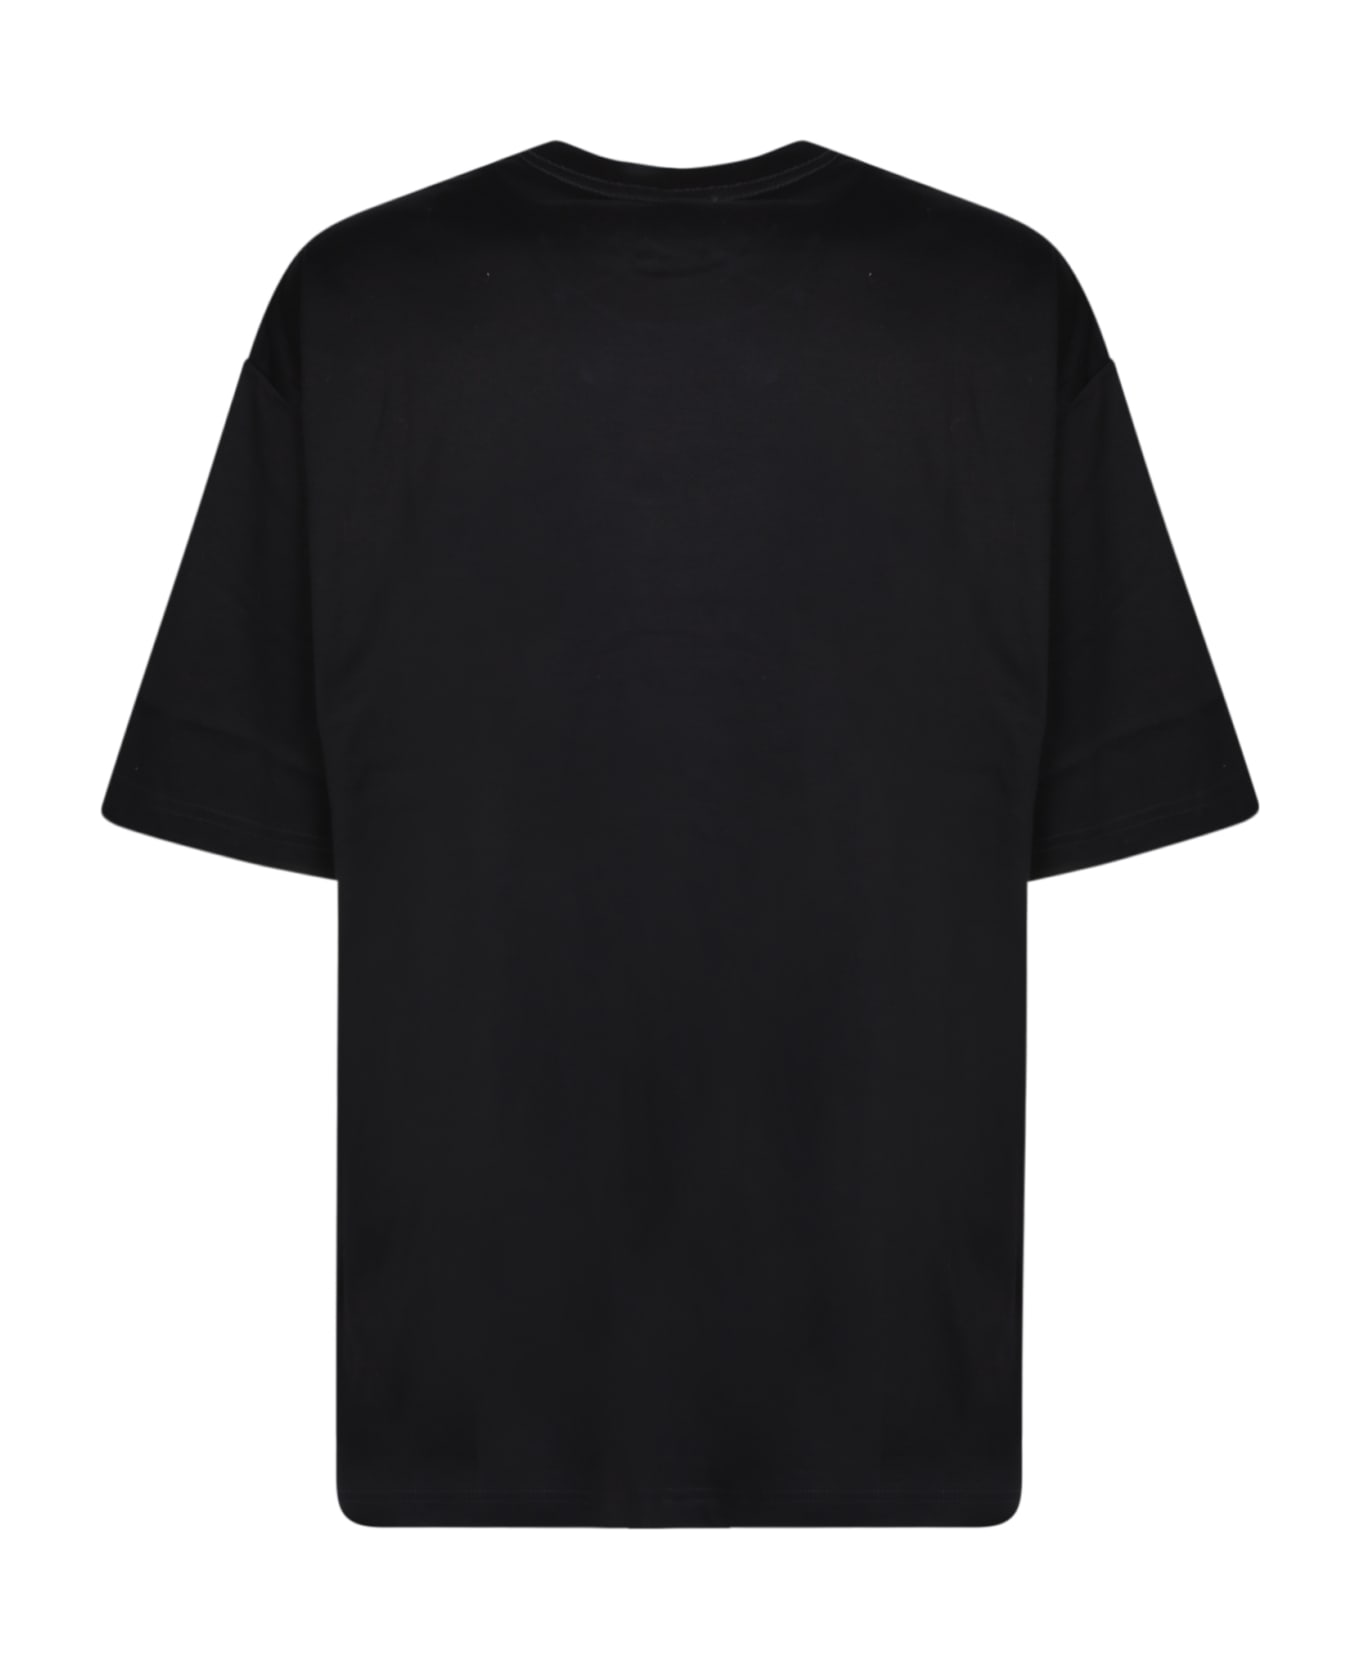 Lanvin Curblance Black T-shirt - Black シャツ